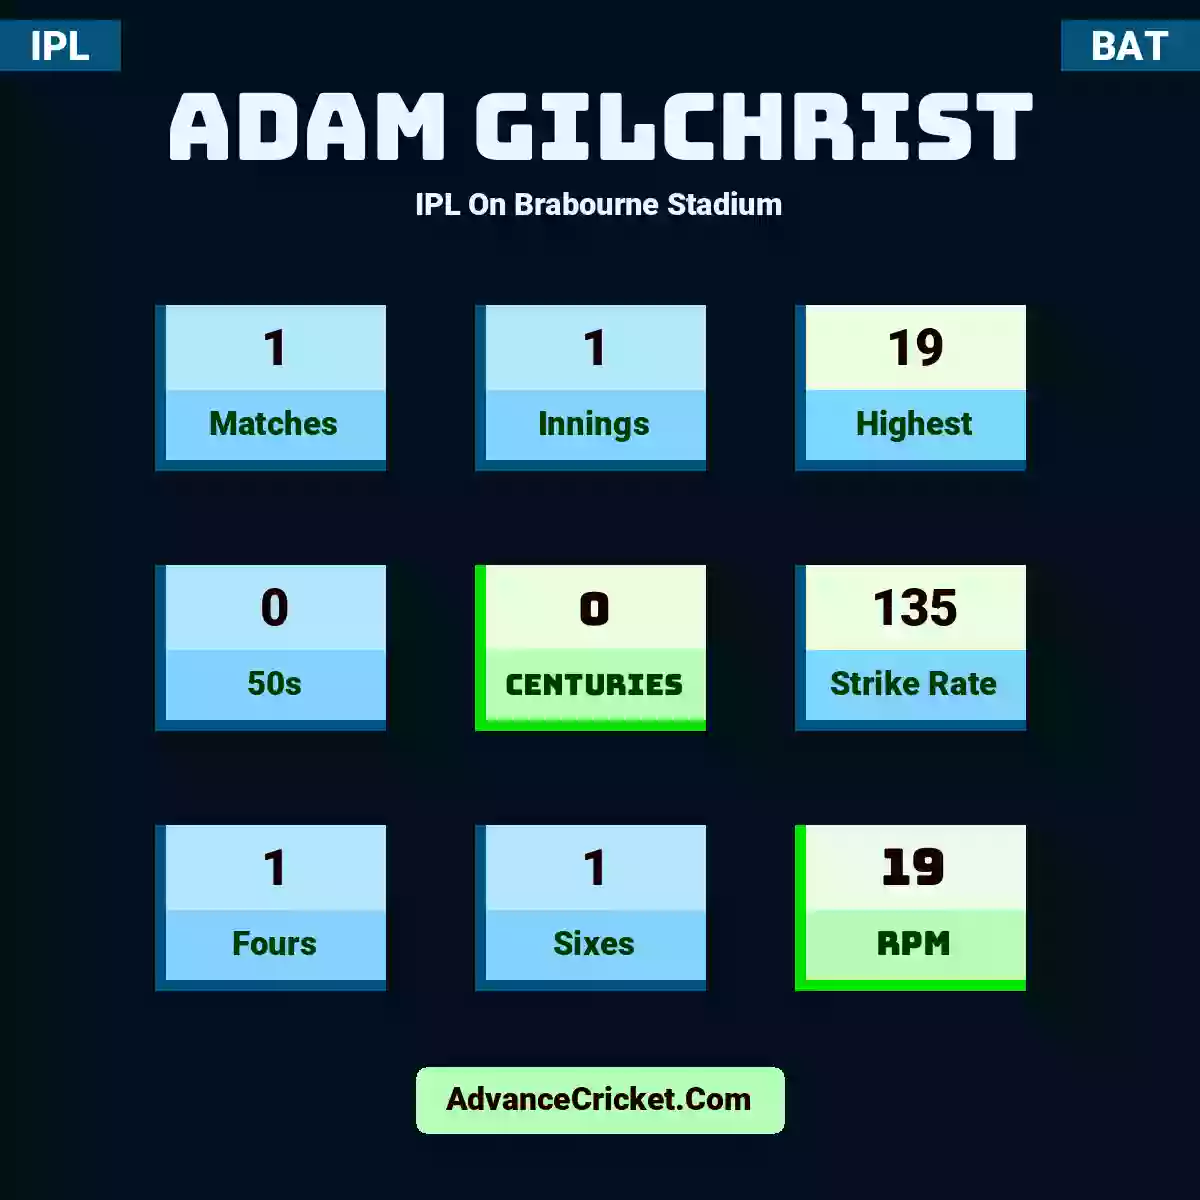 Adam Gilchrist IPL  On Brabourne Stadium, Adam Gilchrist played 1 matches, scored 19 runs as highest, 0 half-centuries, and 0 centuries, with a strike rate of 135. A.Gilchrist hit 1 fours and 1 sixes, with an RPM of 19.